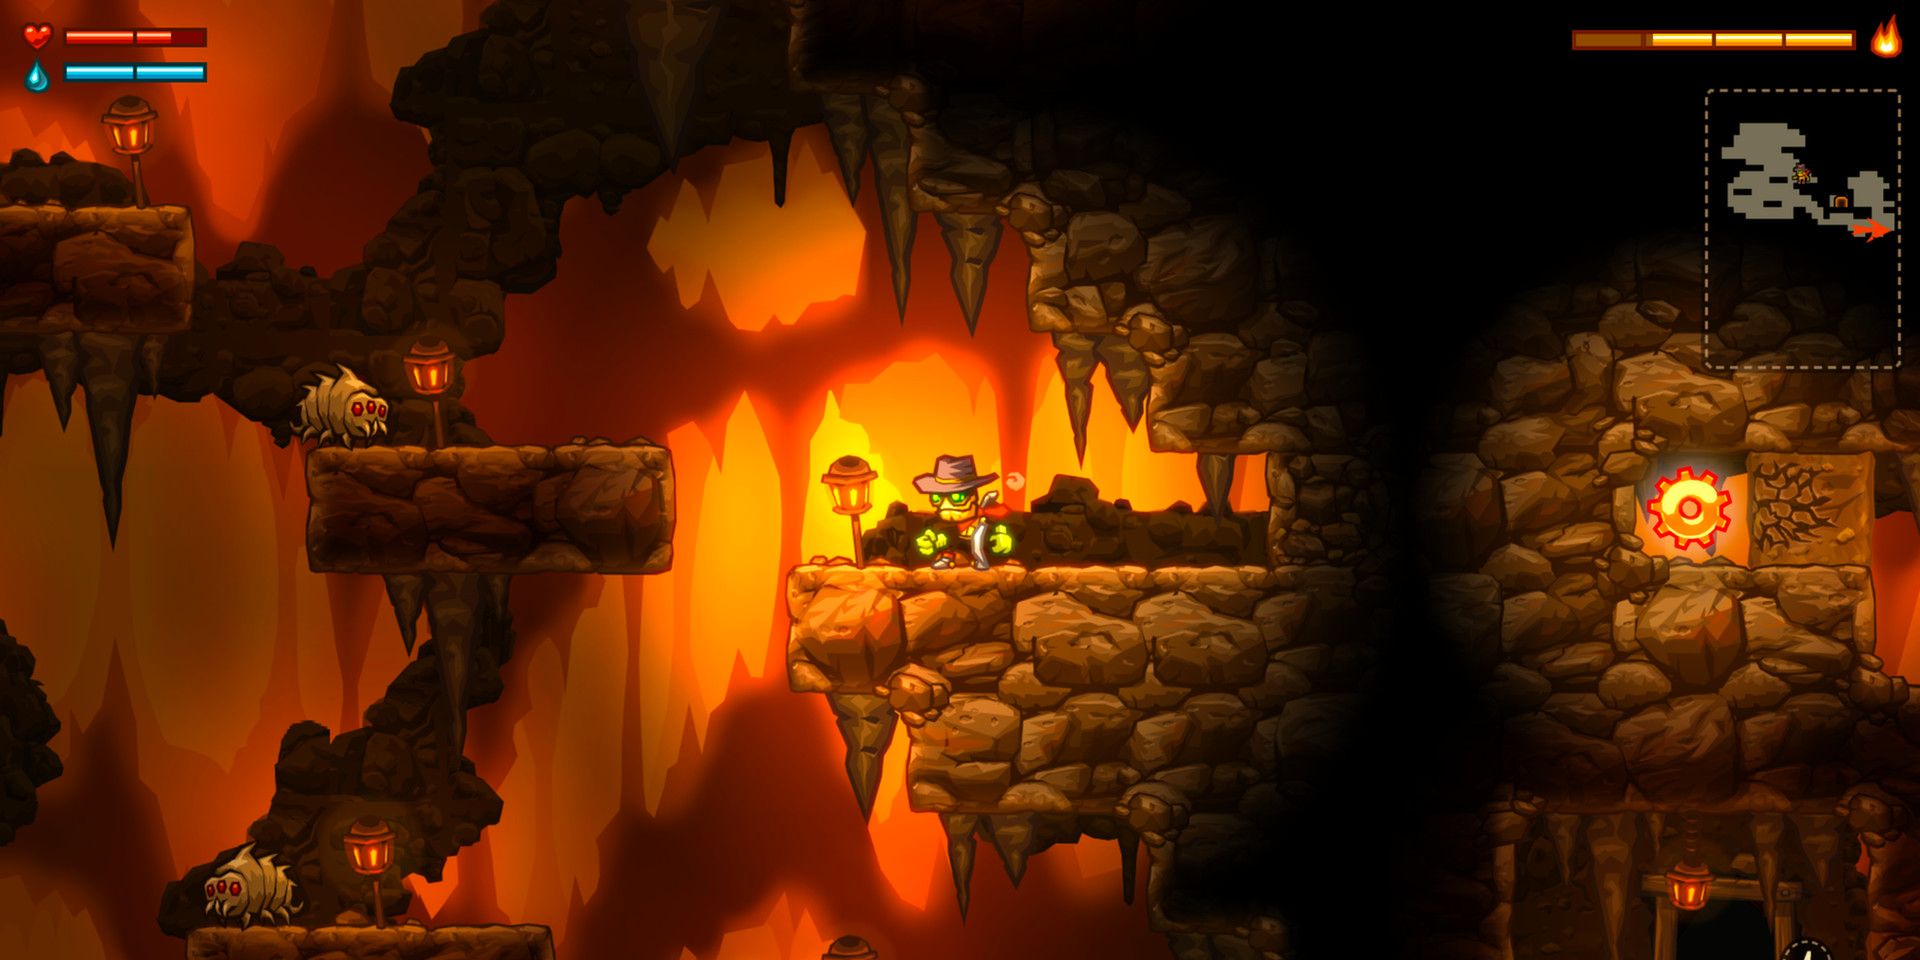 Rusty exploring the underground mines